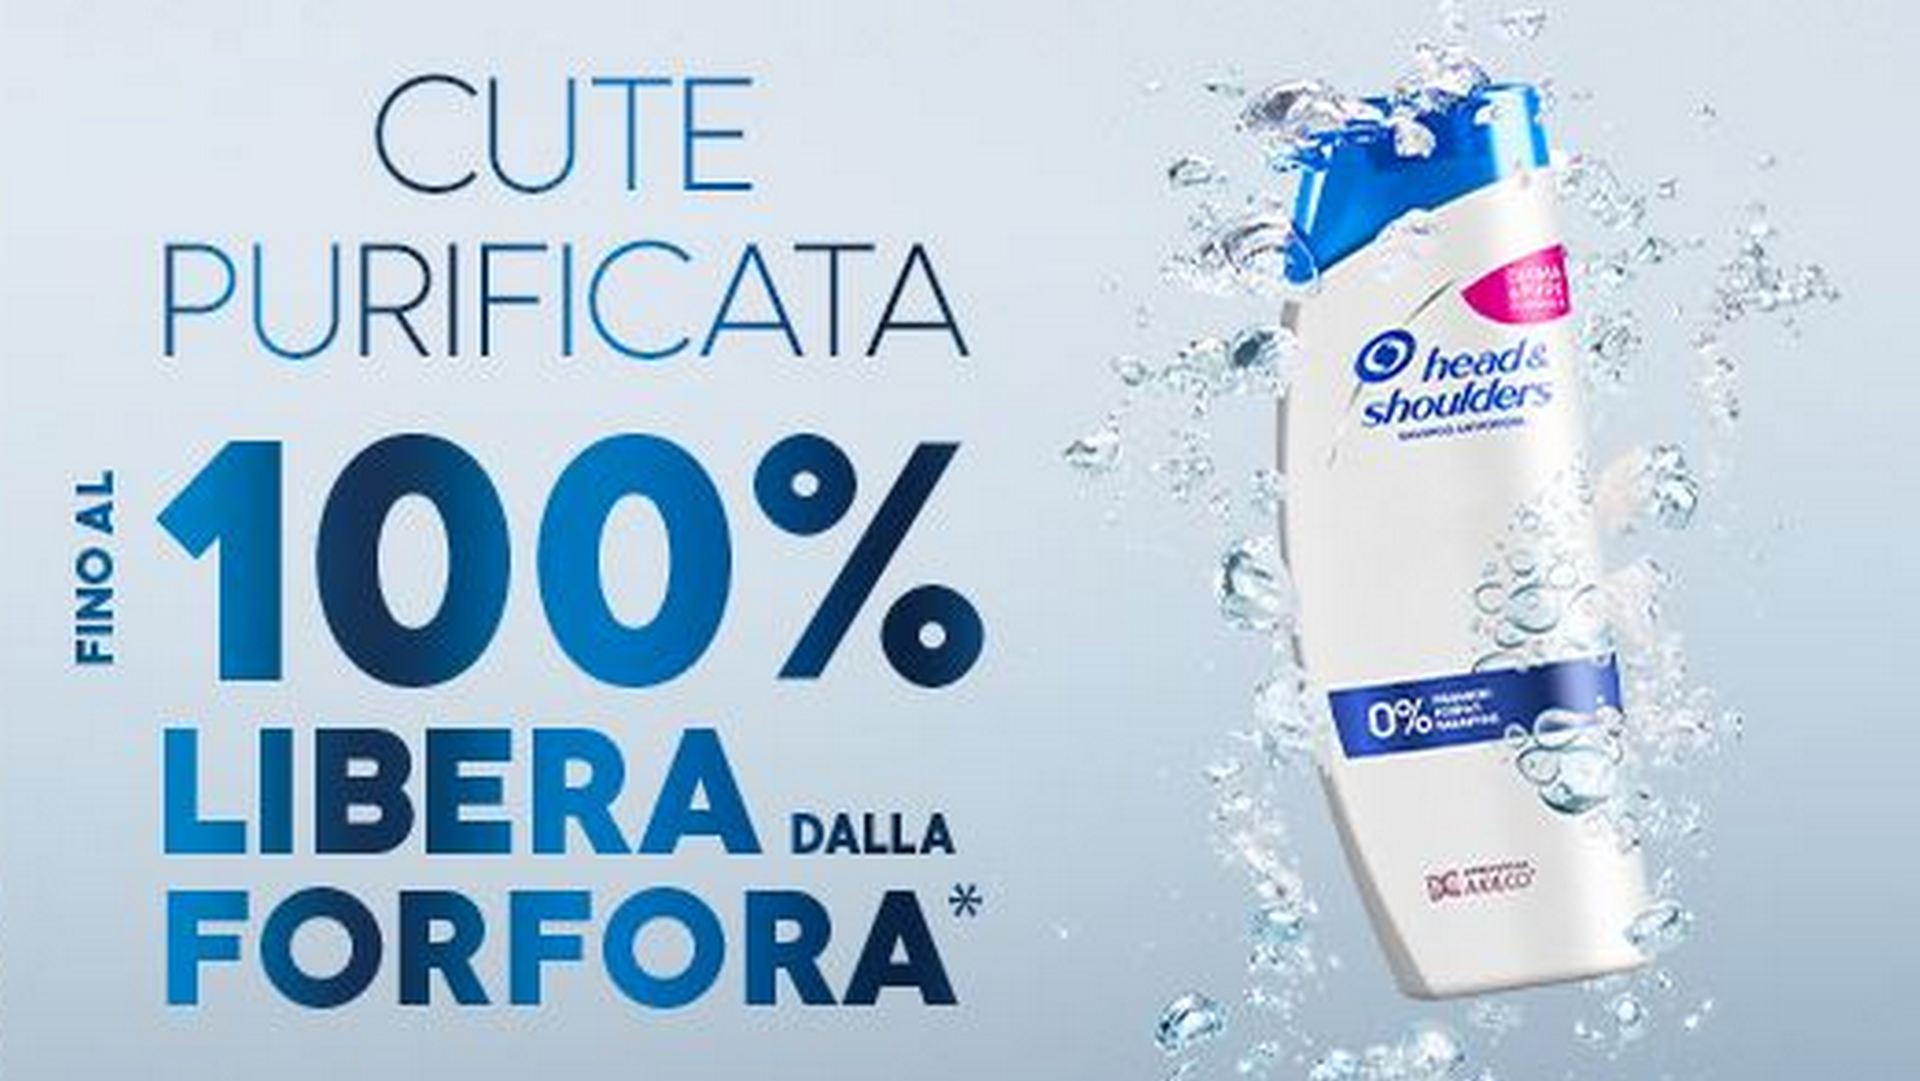 head and shoulders shampoo balsamo antiforfora promozione offerta cashback